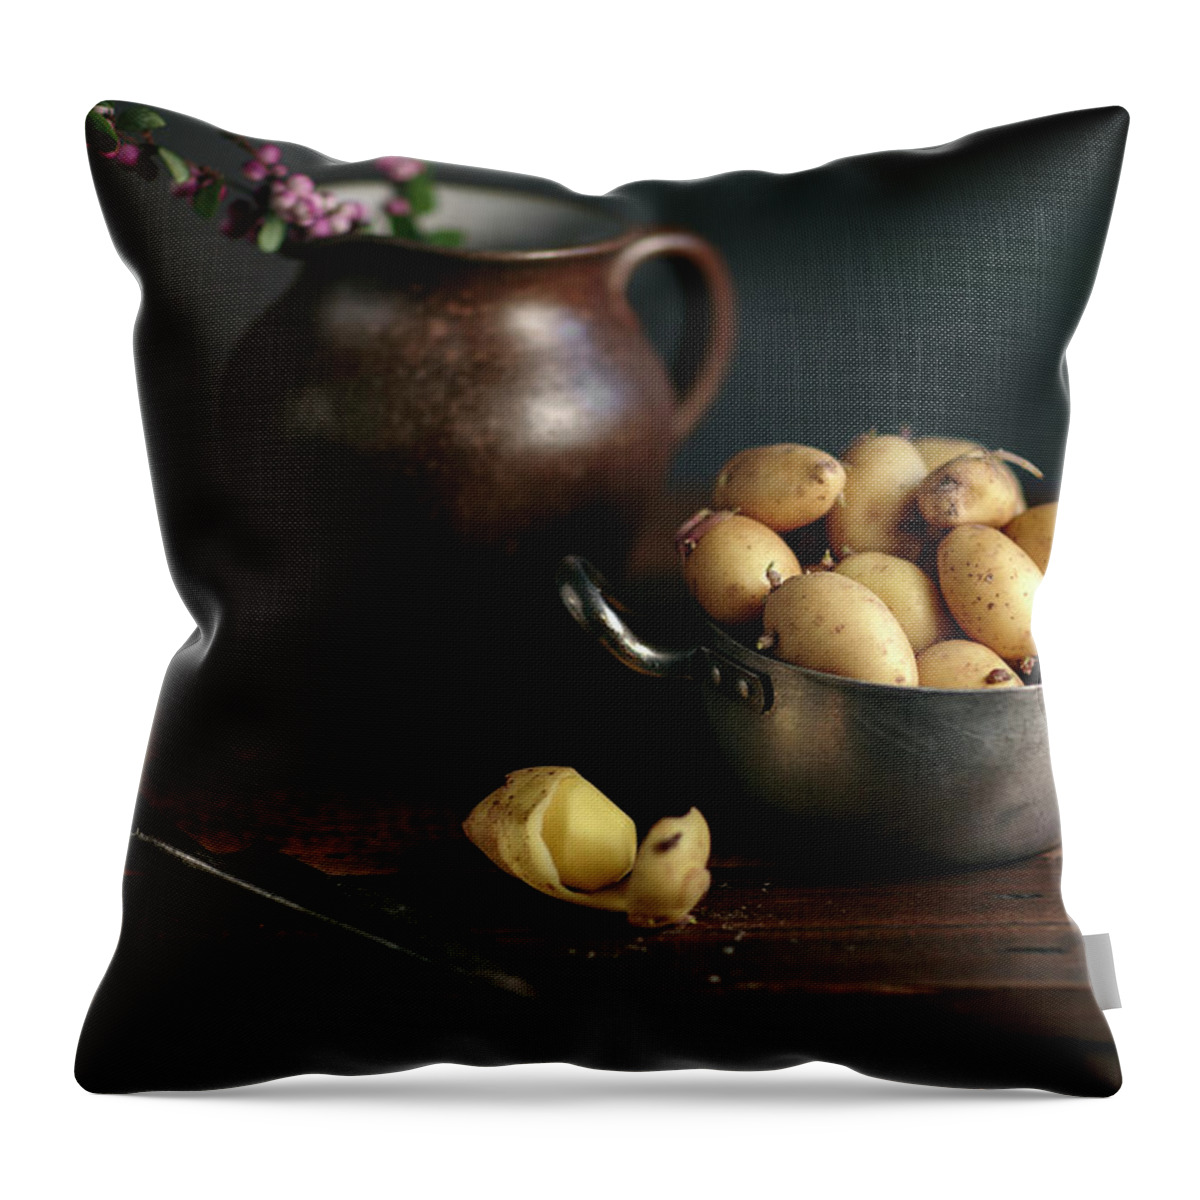 Potato Throw Pillow featuring the photograph Still Life with Potatoes by Nailia Schwarz